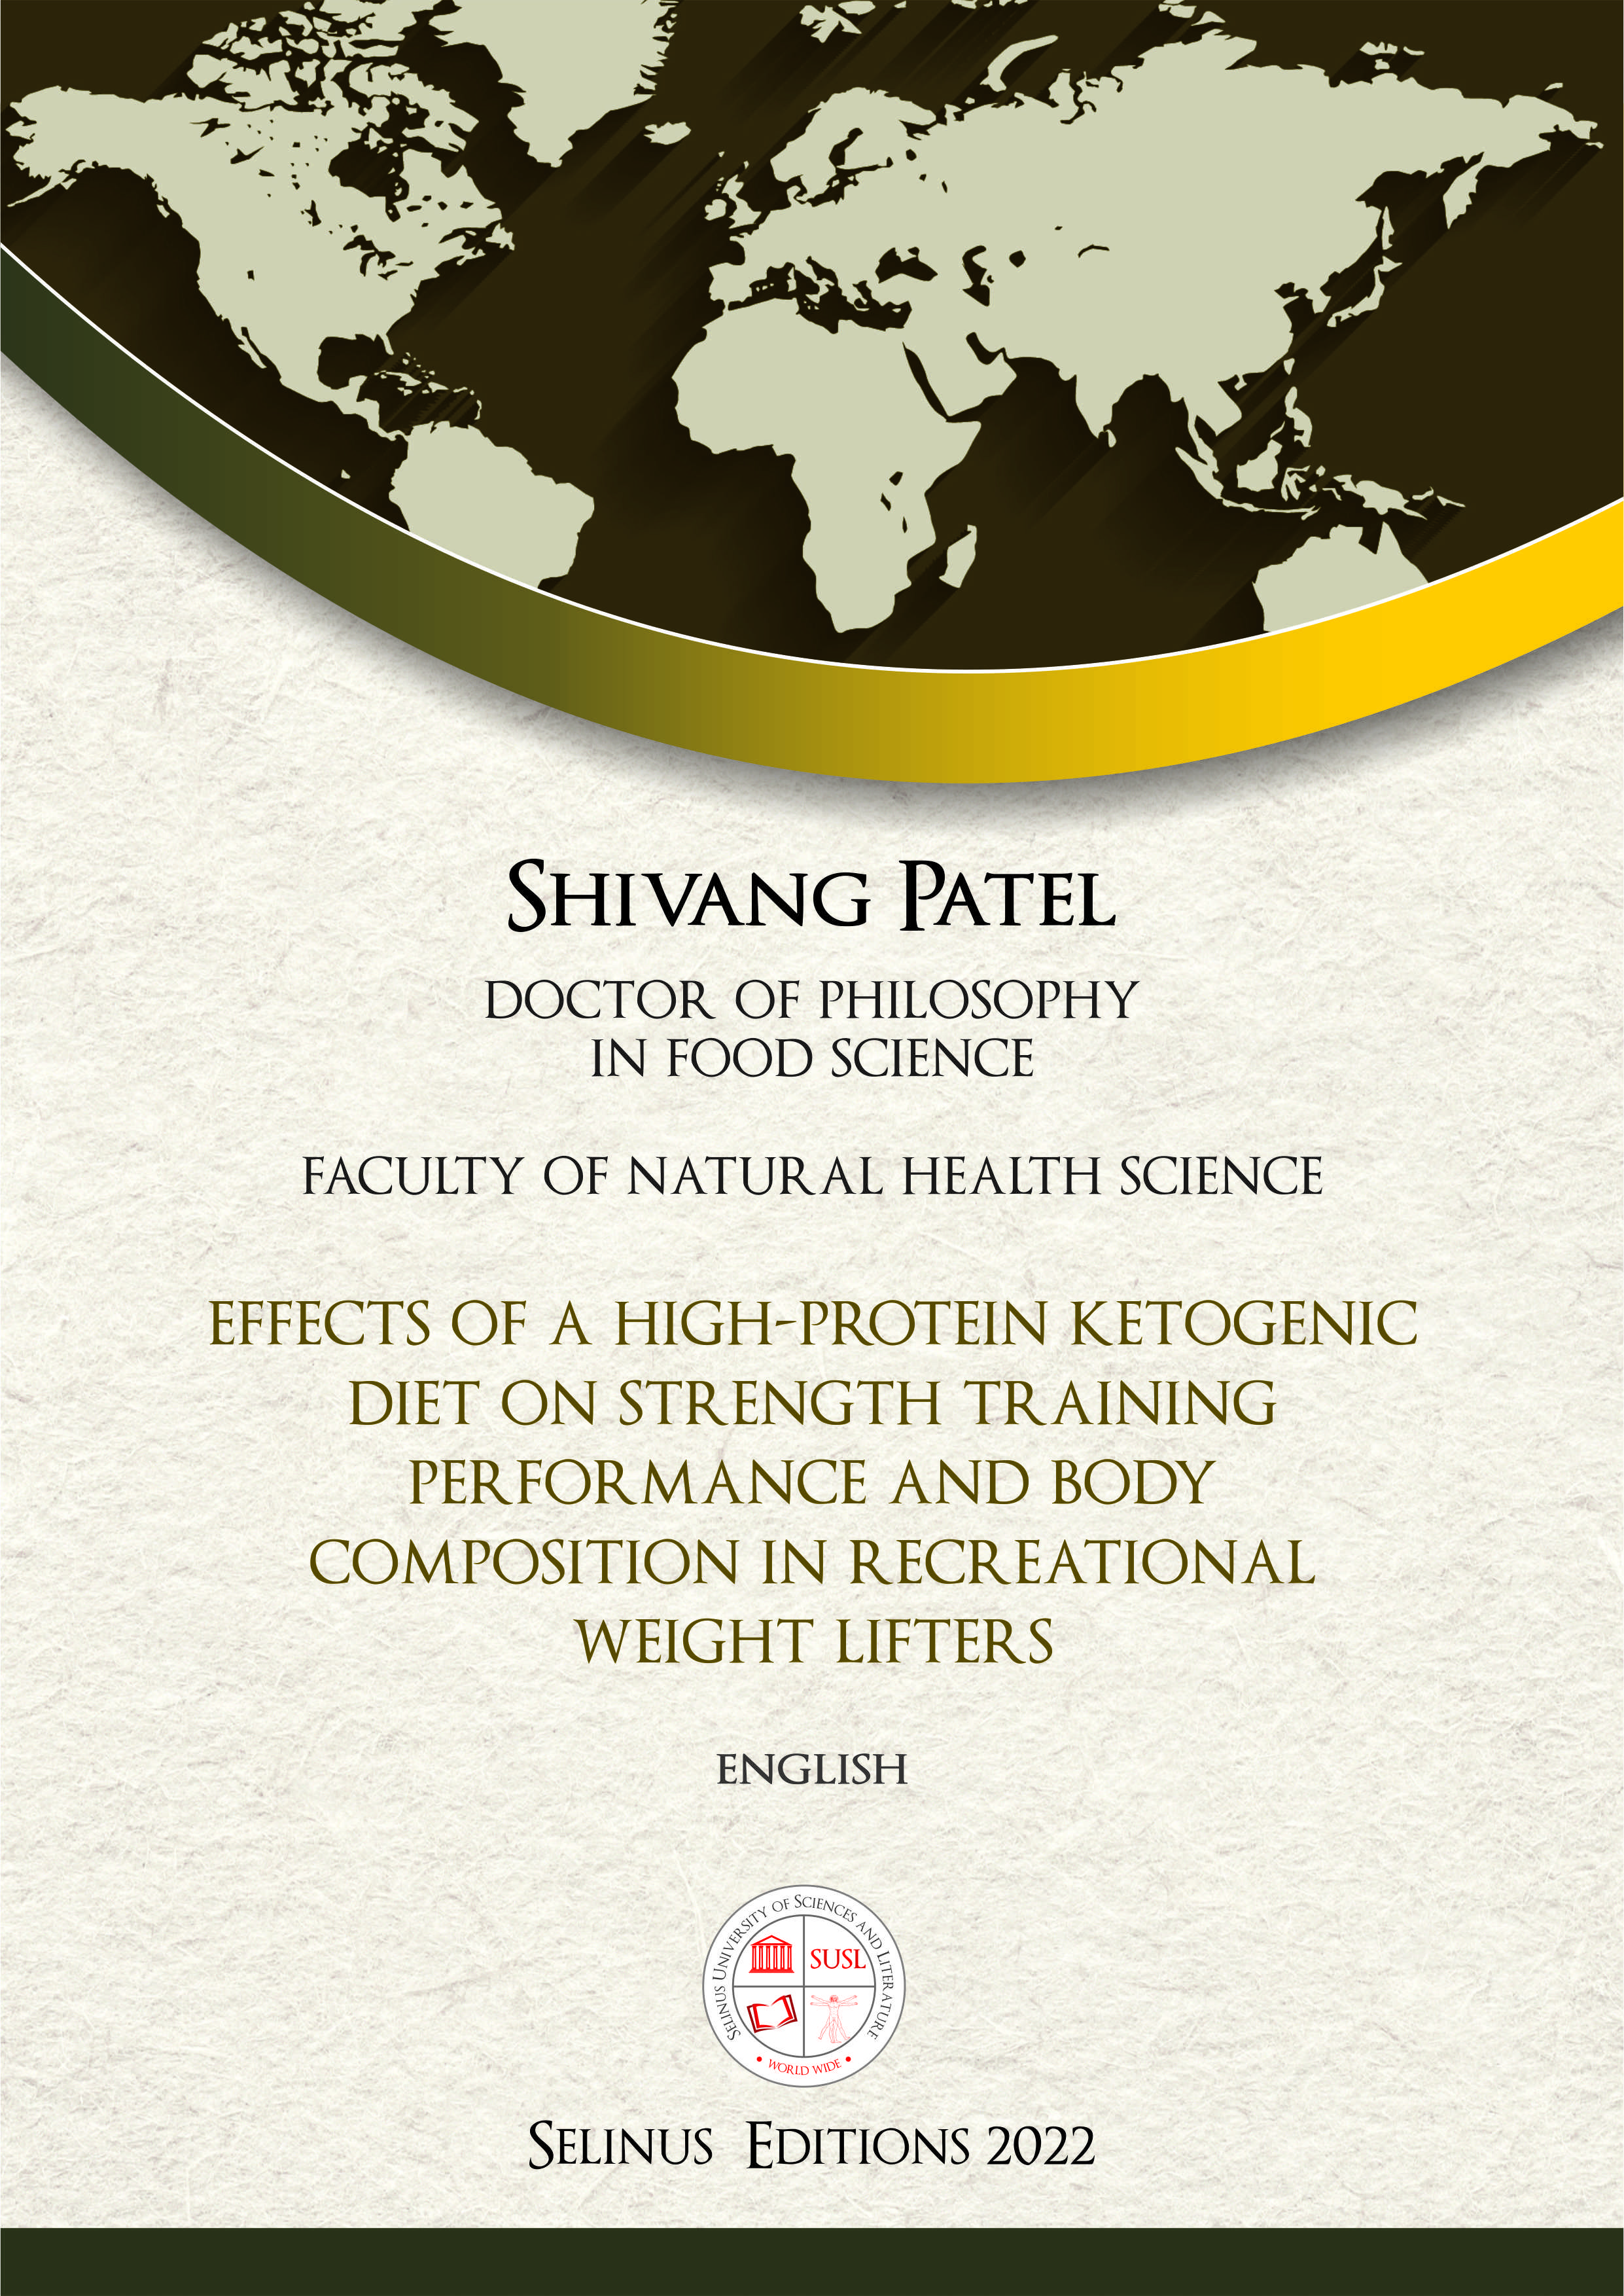 Thesis Shivang Patel